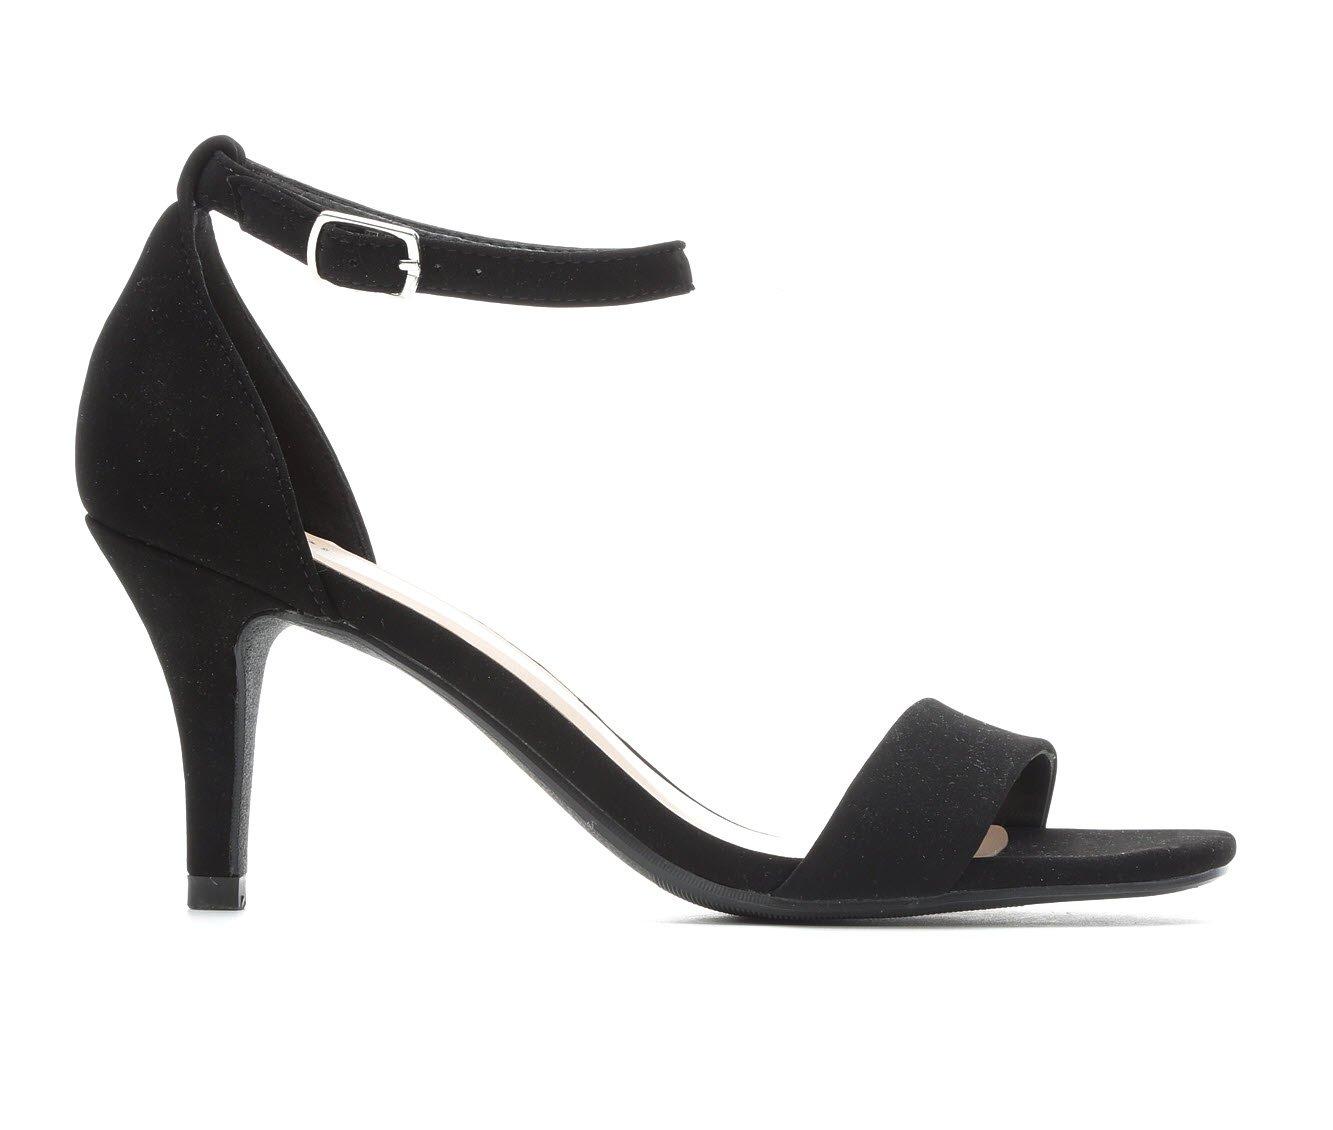 Crocs Women's Black Heeled Sandals Size 9 US Strappy Shoes